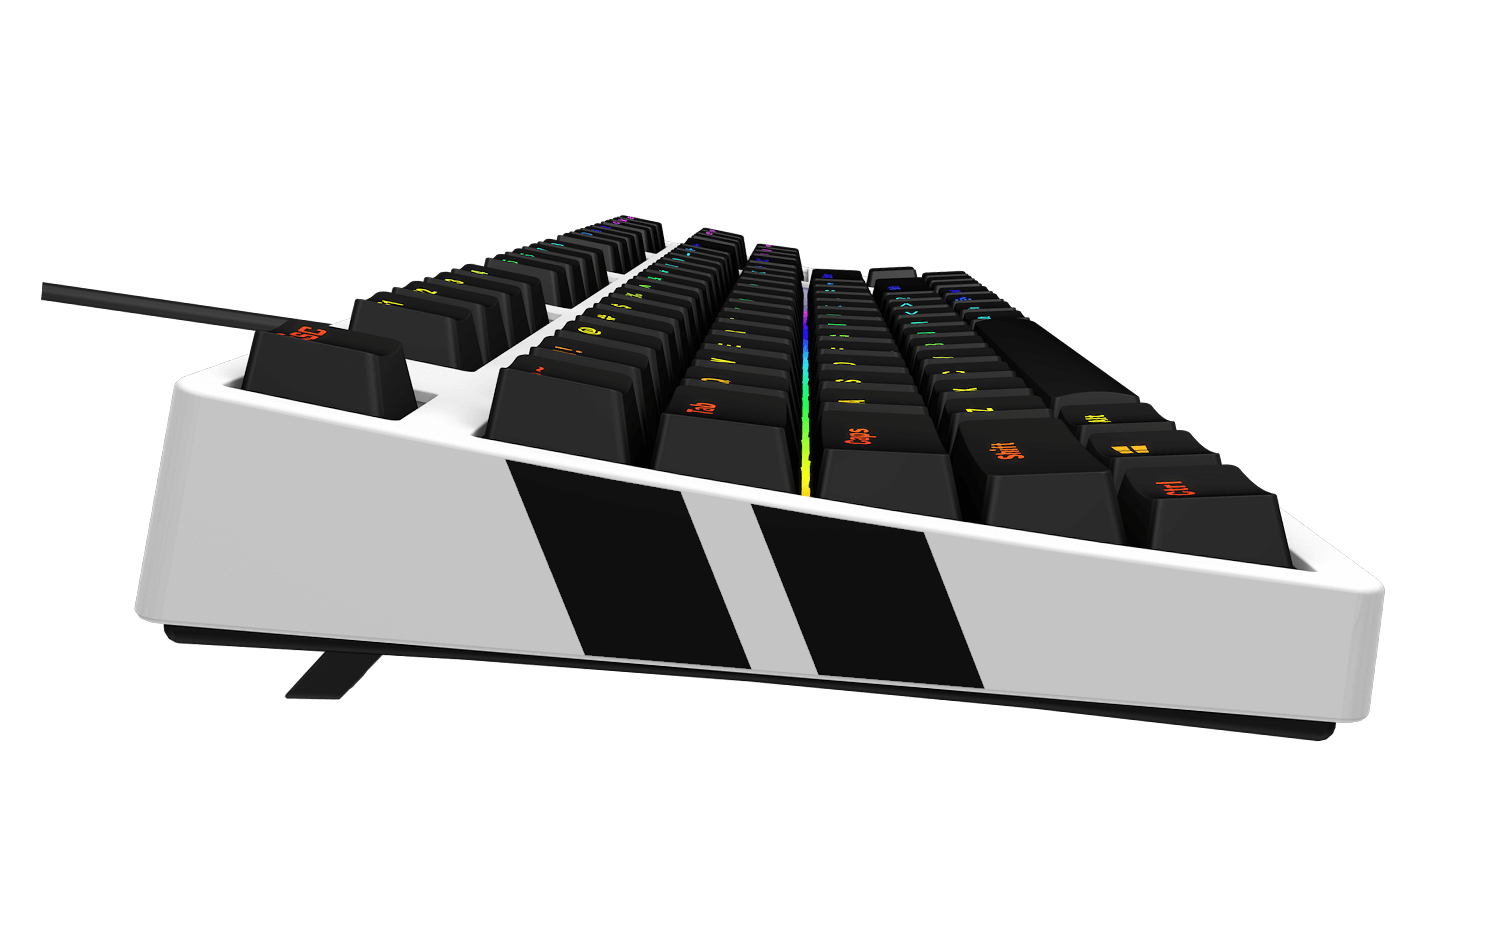 UVI Pride Mini WESLAV pbt keyboard